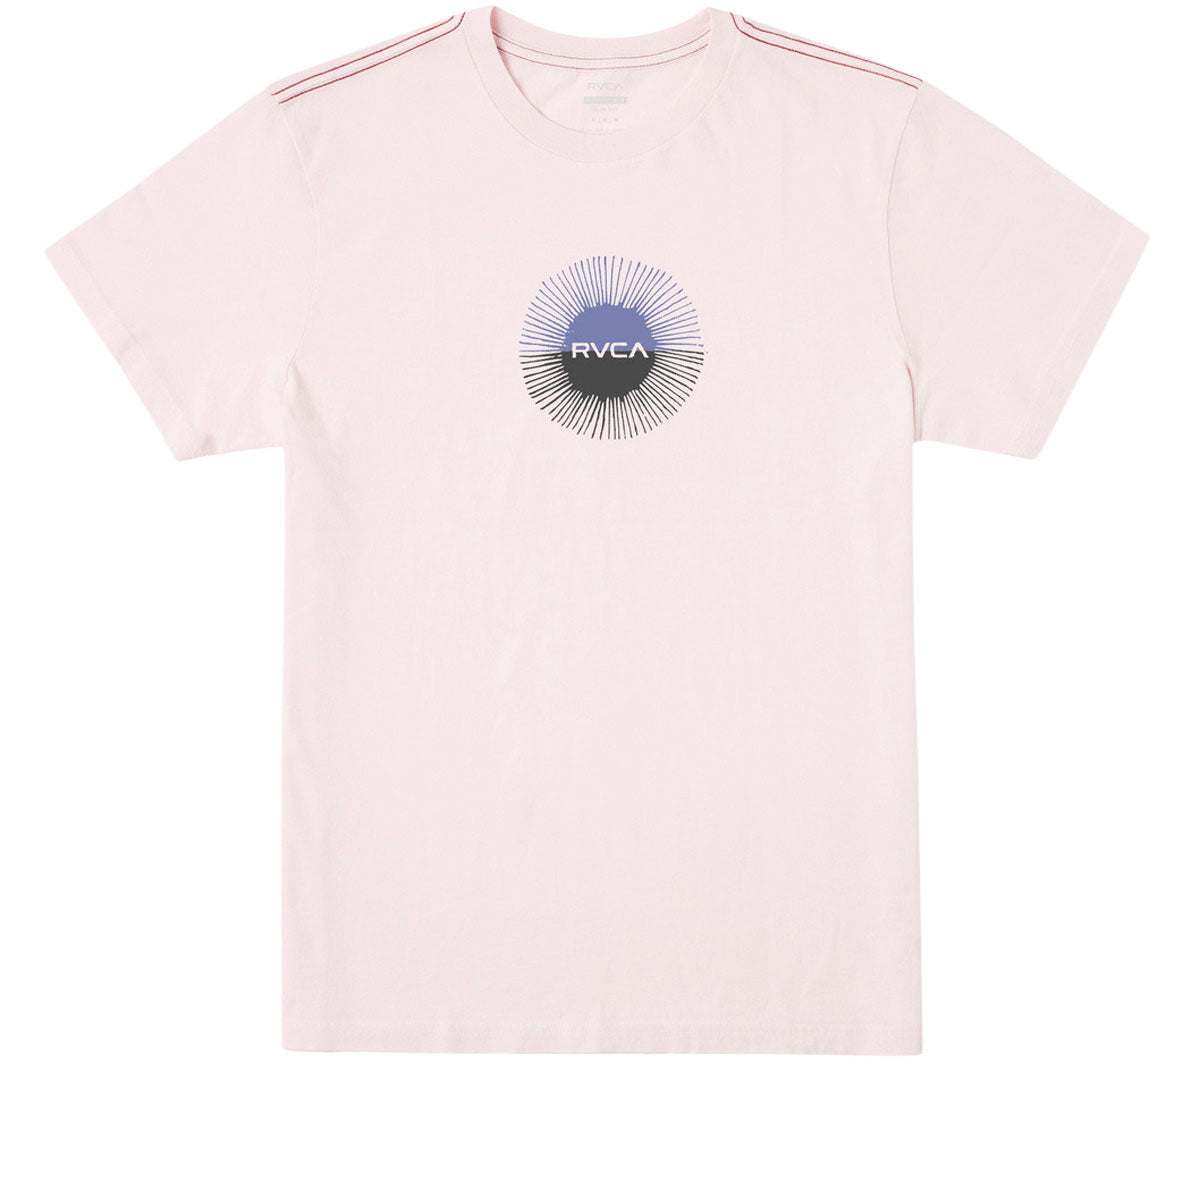 RVCA Solar Eclipse T-Shirt - Light Pink image 1